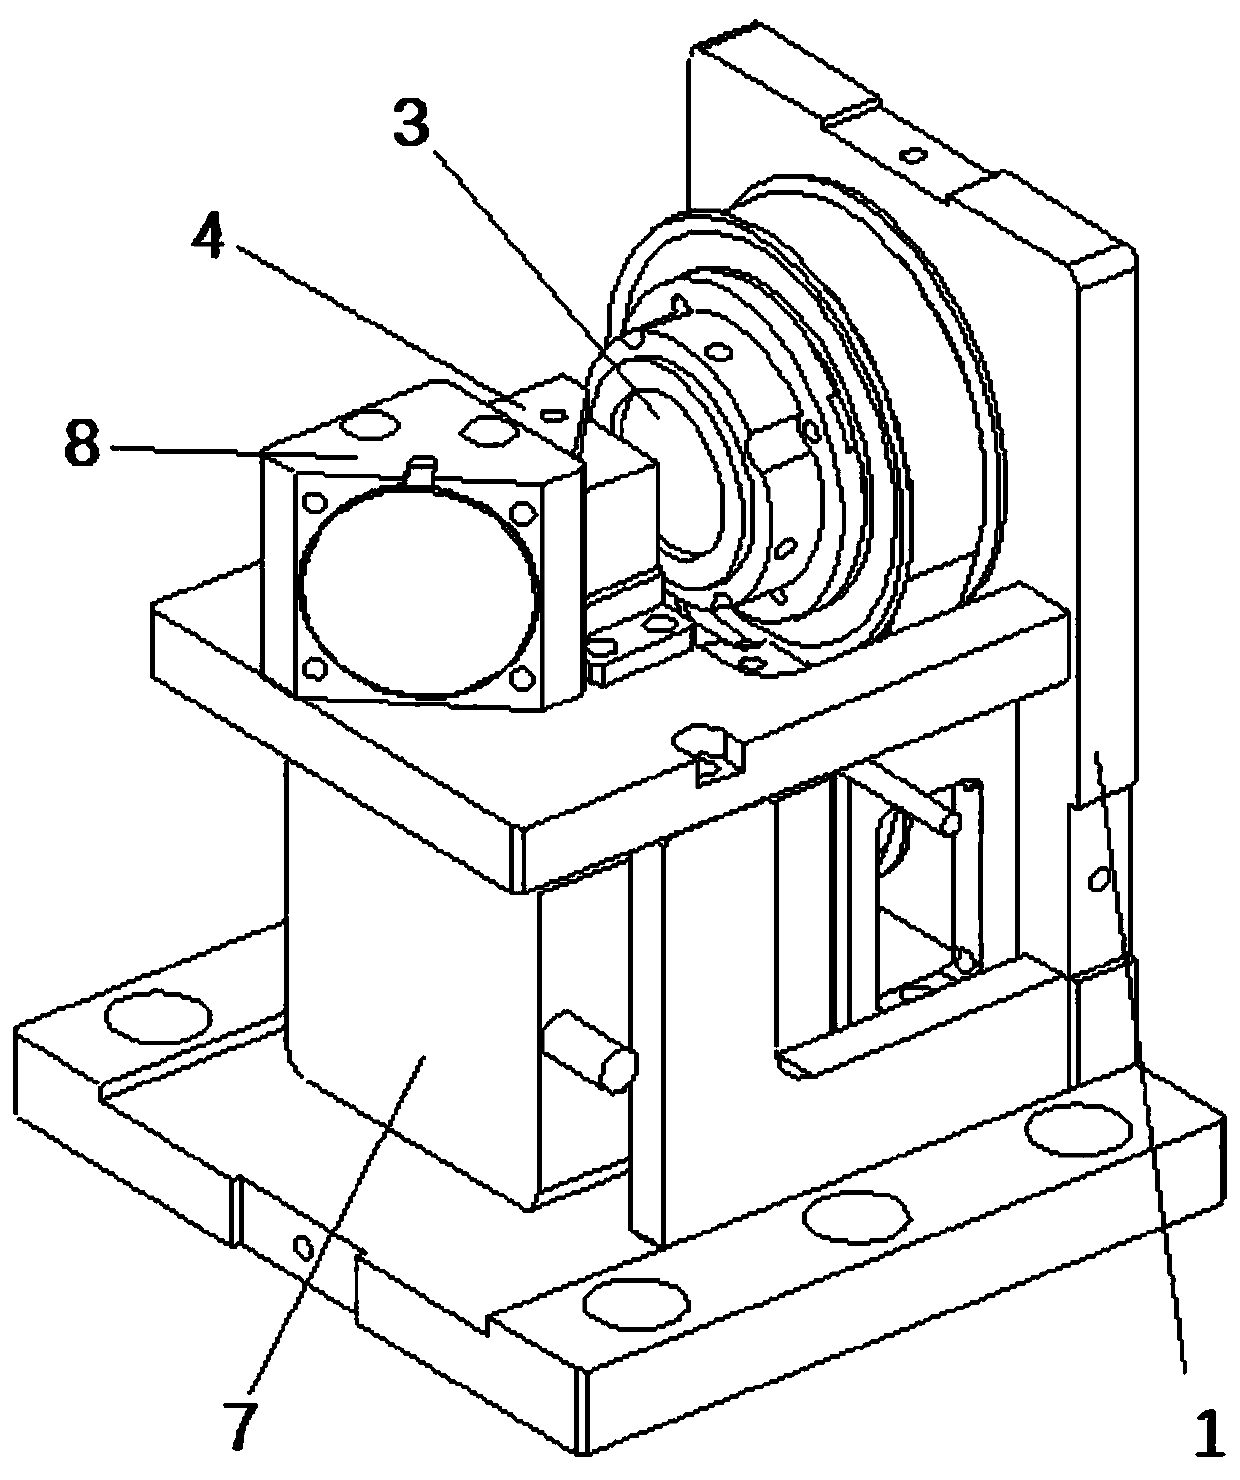 Laser power regulation device, laser cutting device and laser cutting machine